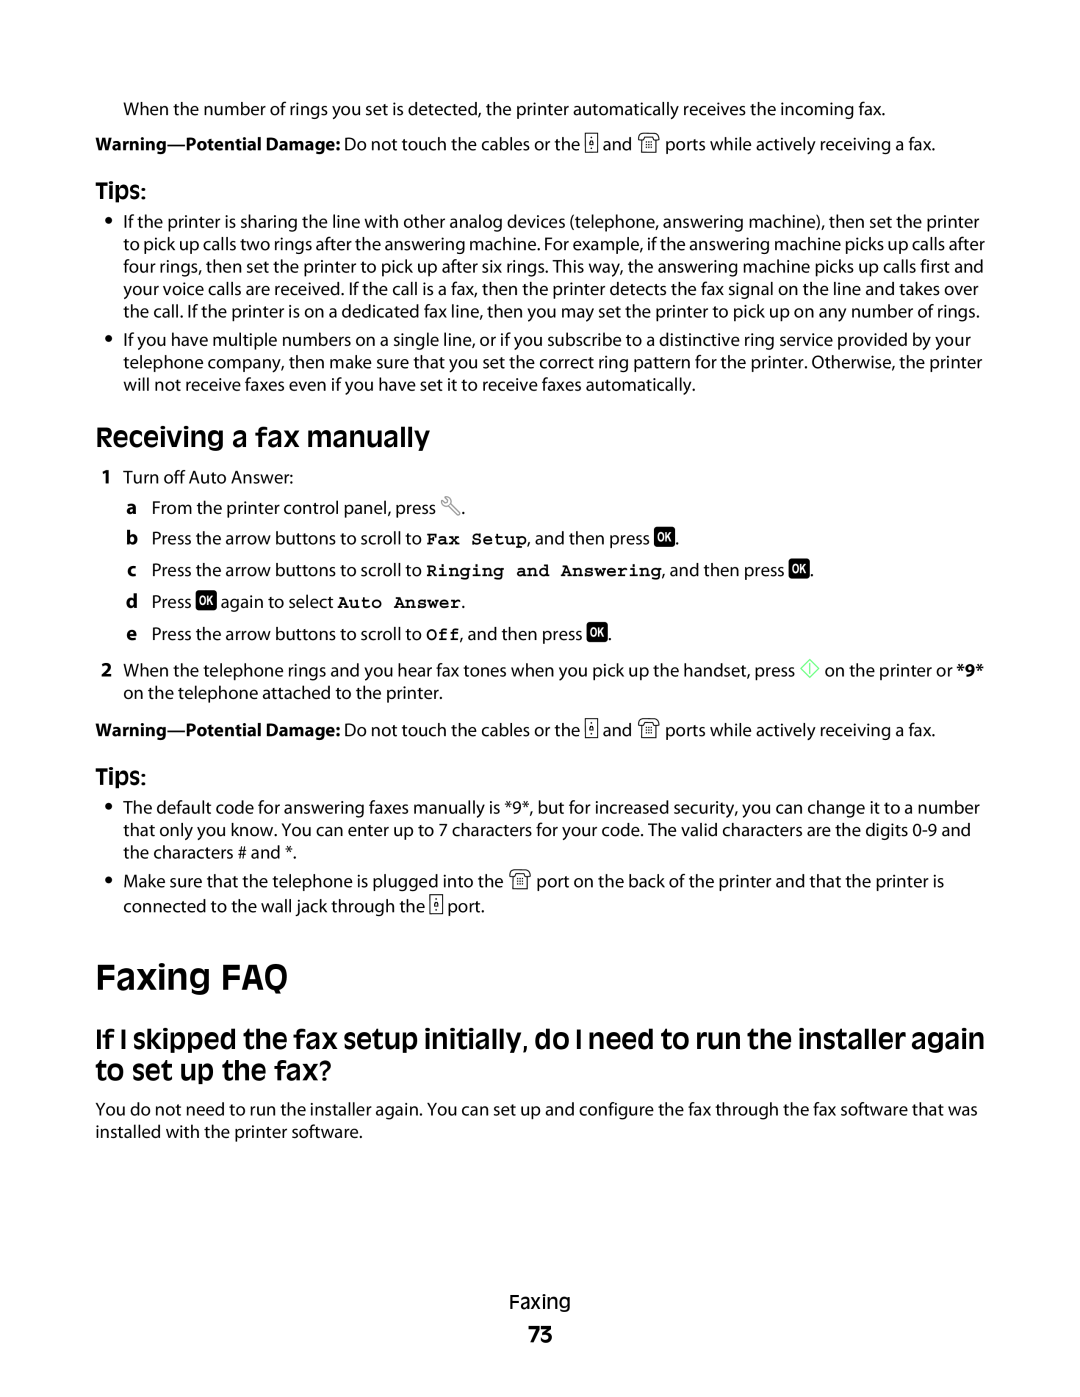 Dell V515W Faxing FAQ, Receiving a fax manually, Tips 